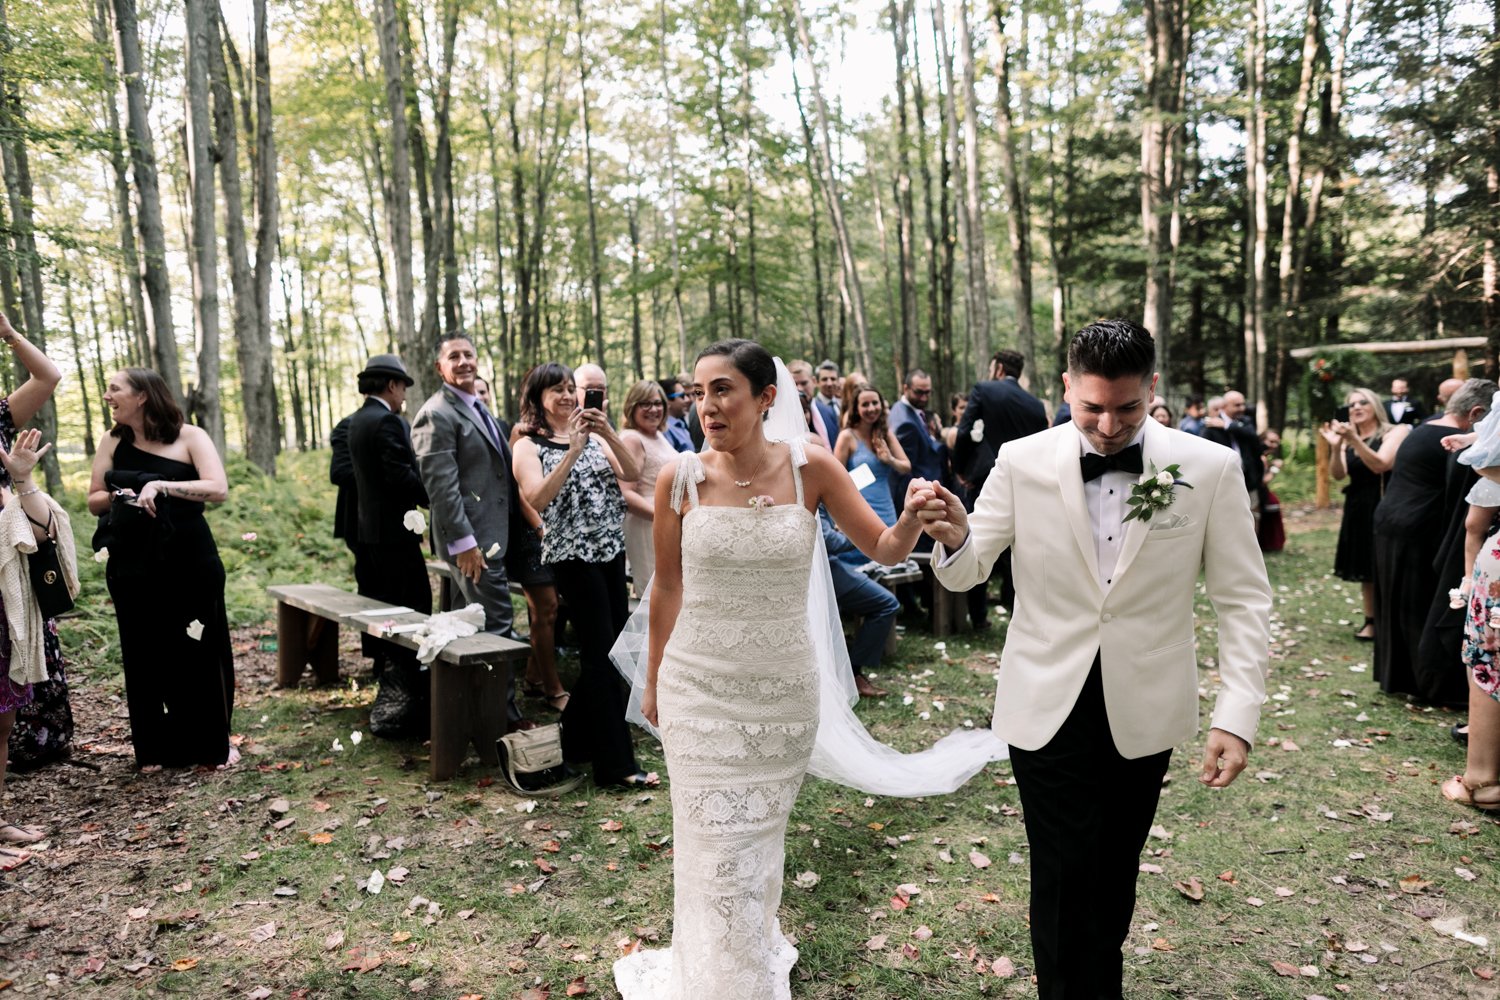 Handsome-Hollow-Catskills-wedding-photographer-73.jpg